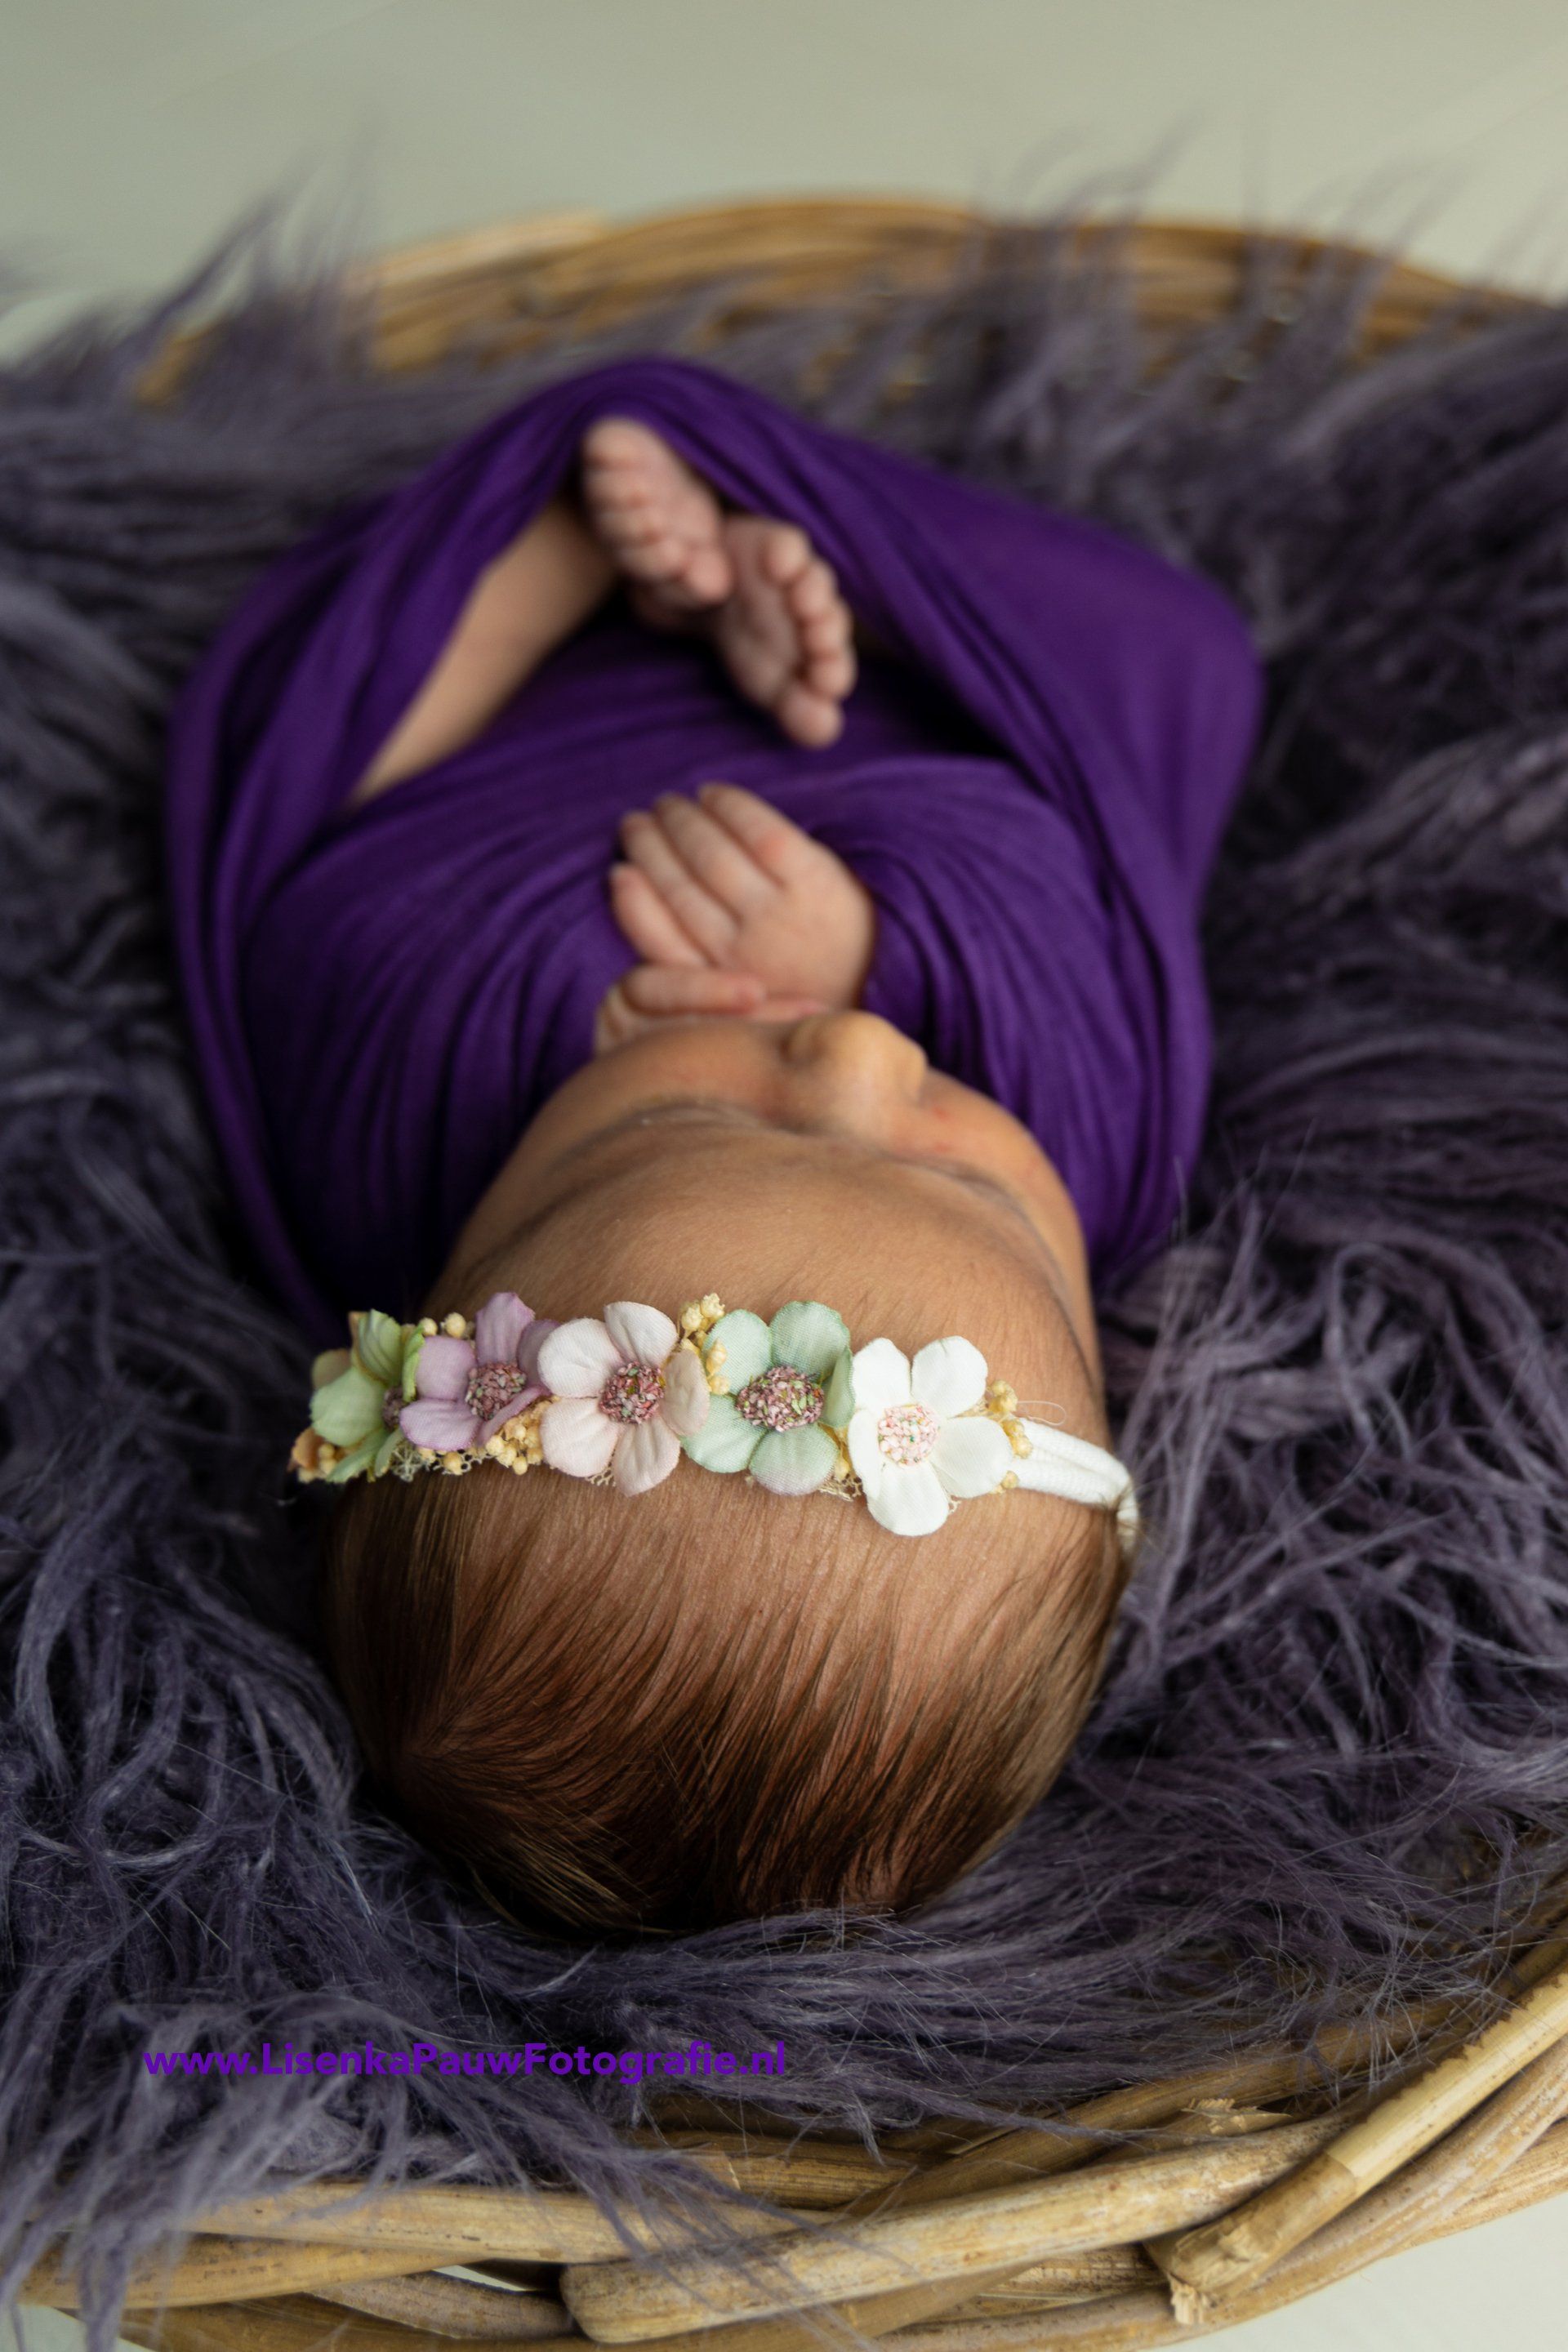 newborn, baby, foto, Lisenka Pauw Fotografie